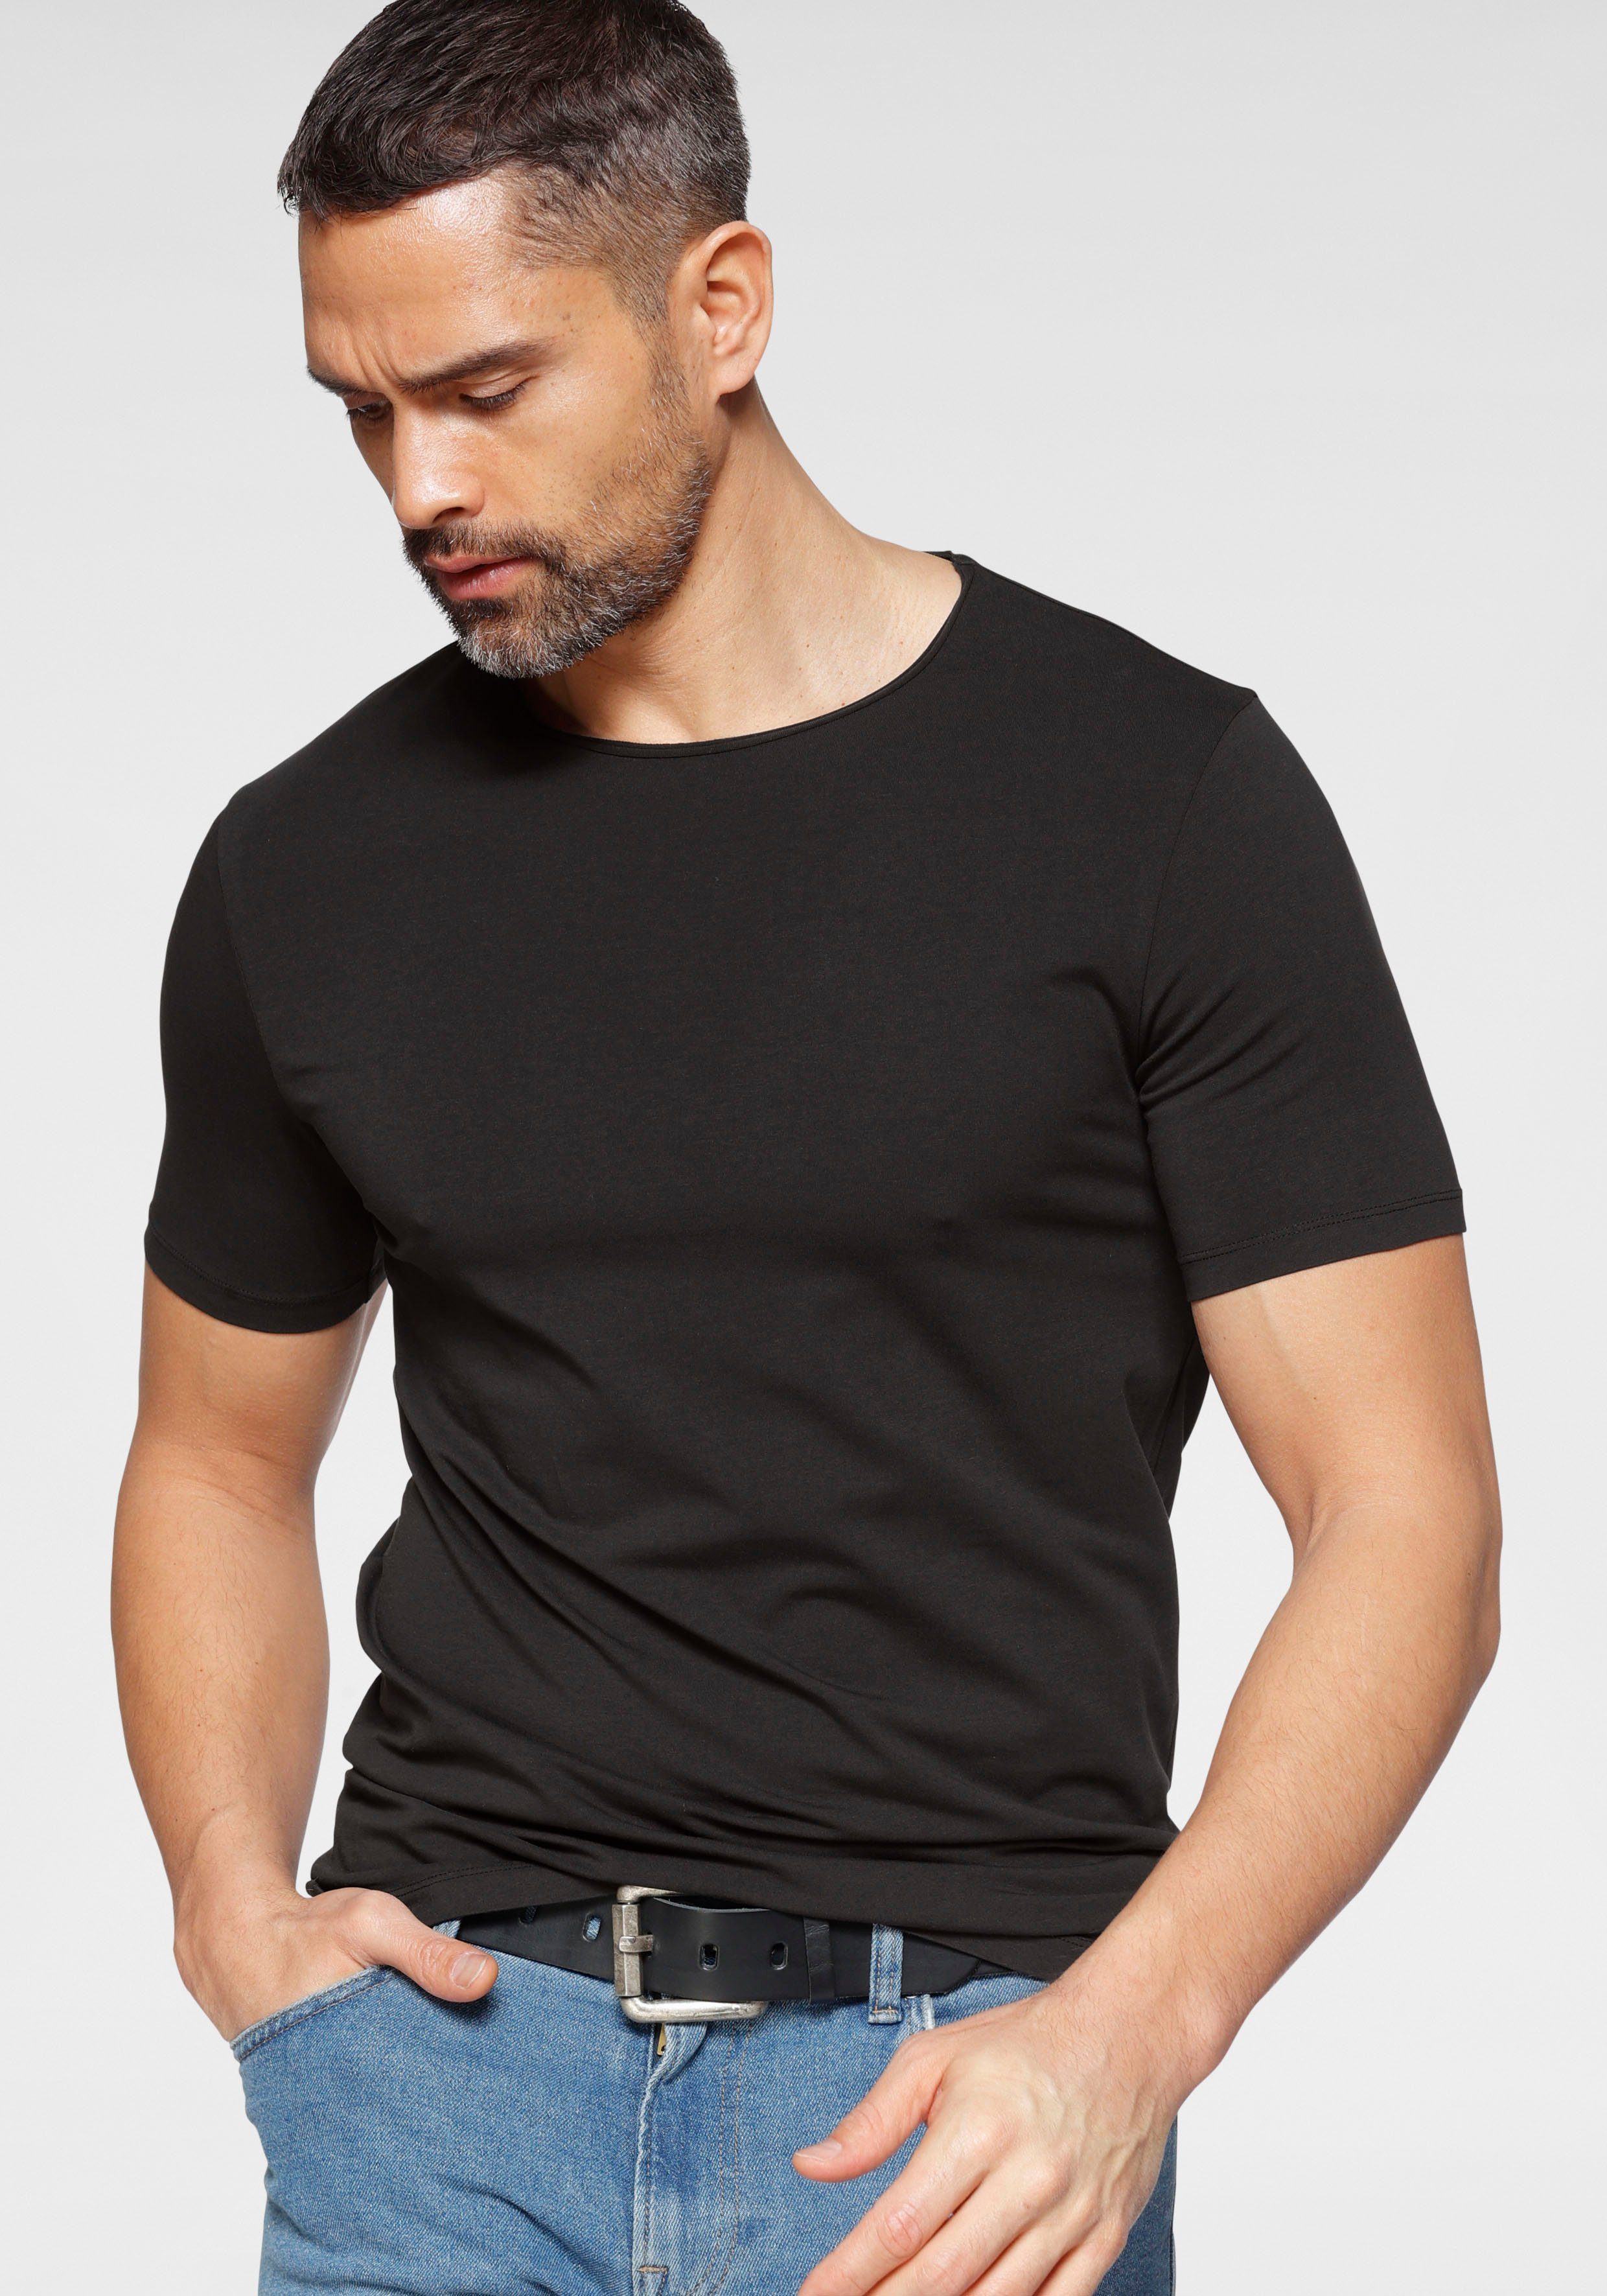 T-Shirt Level aus Five Jersey OLYMP body fit feinem schwarz